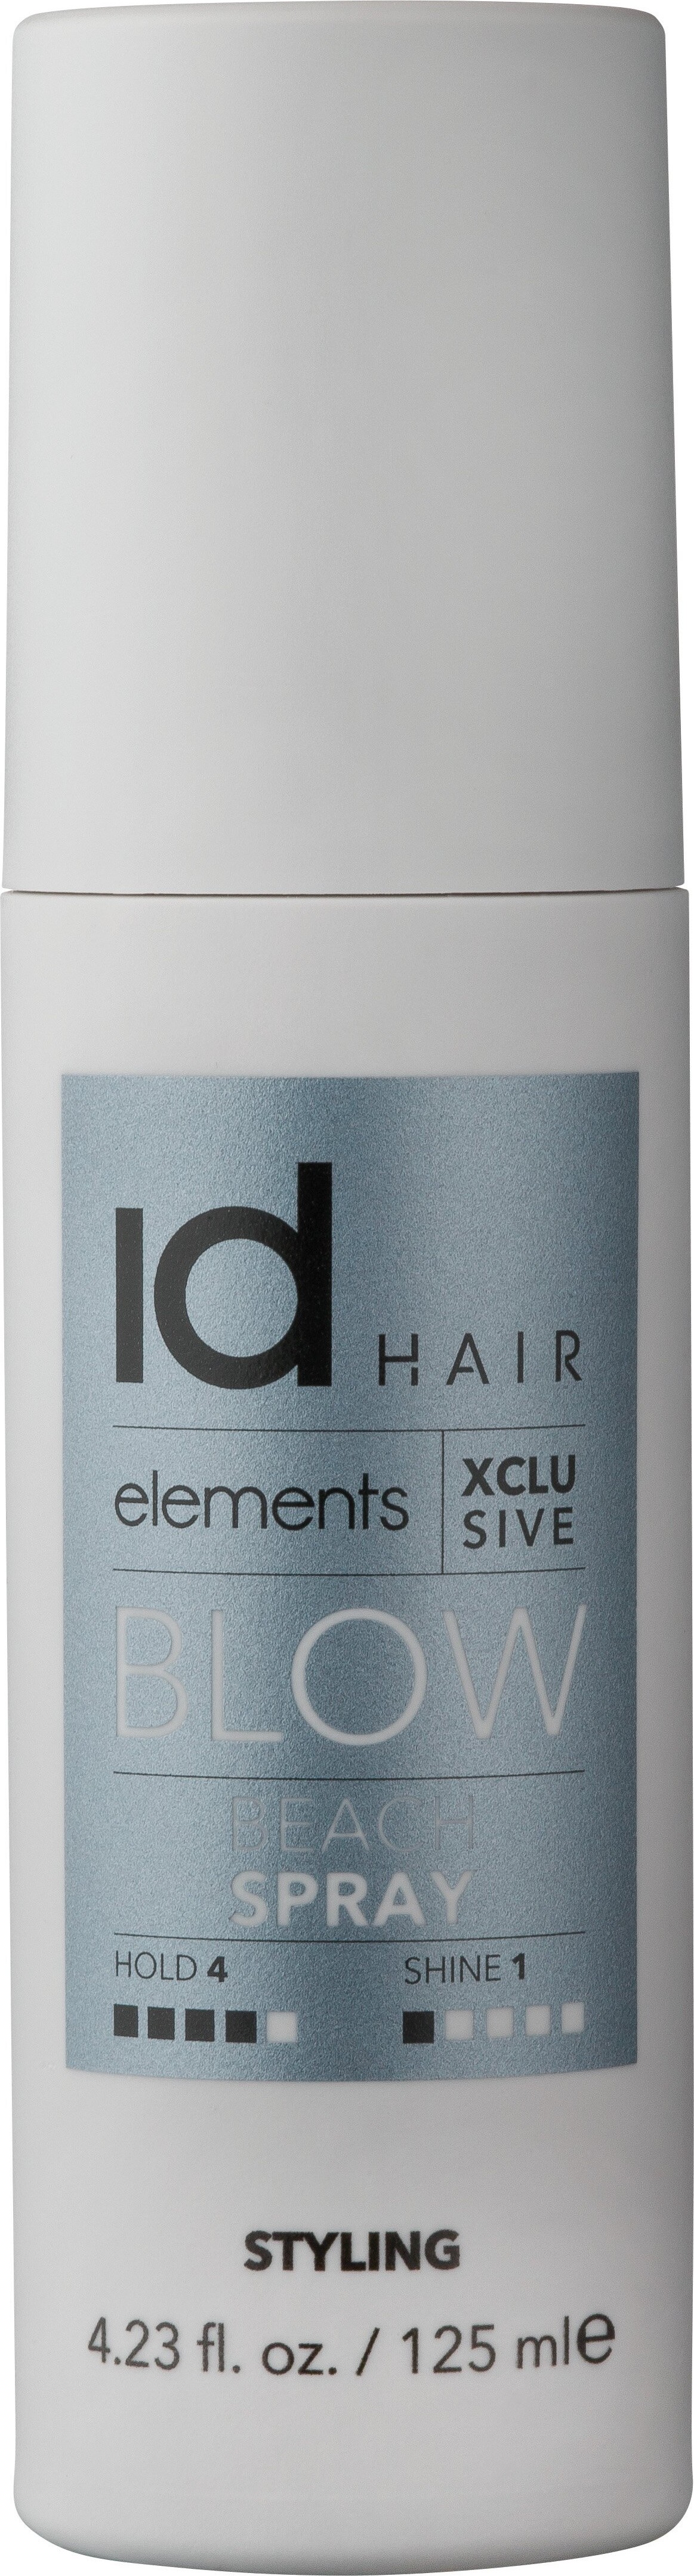 Billede af Id Hair - Elements Xclusive Beach Spray 125 Ml hos Gucca.dk